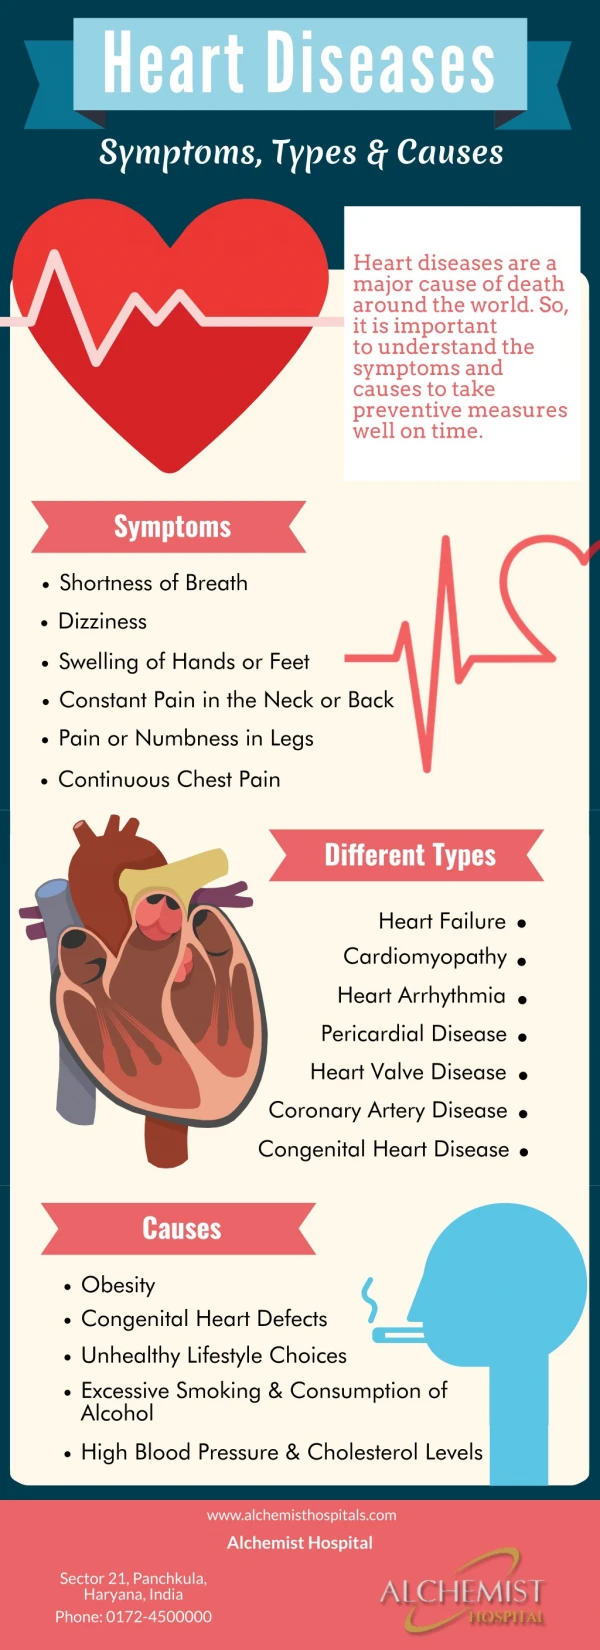 Heart Diseases: Symptoms, Types & Causes